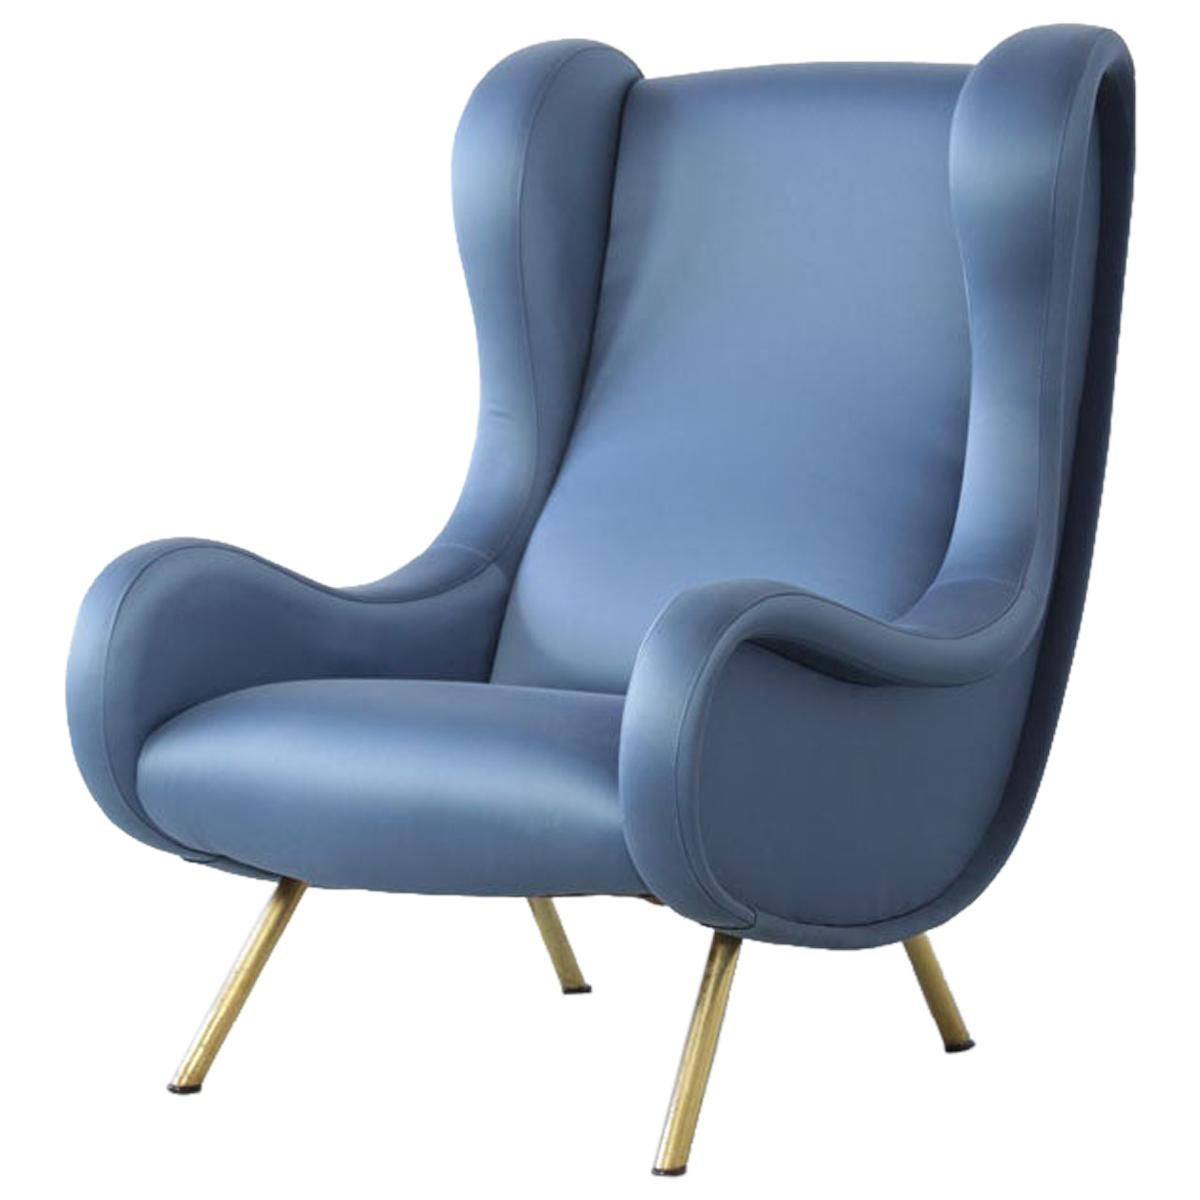 "Senior Chair", Design by Marco Zanuso, 1951